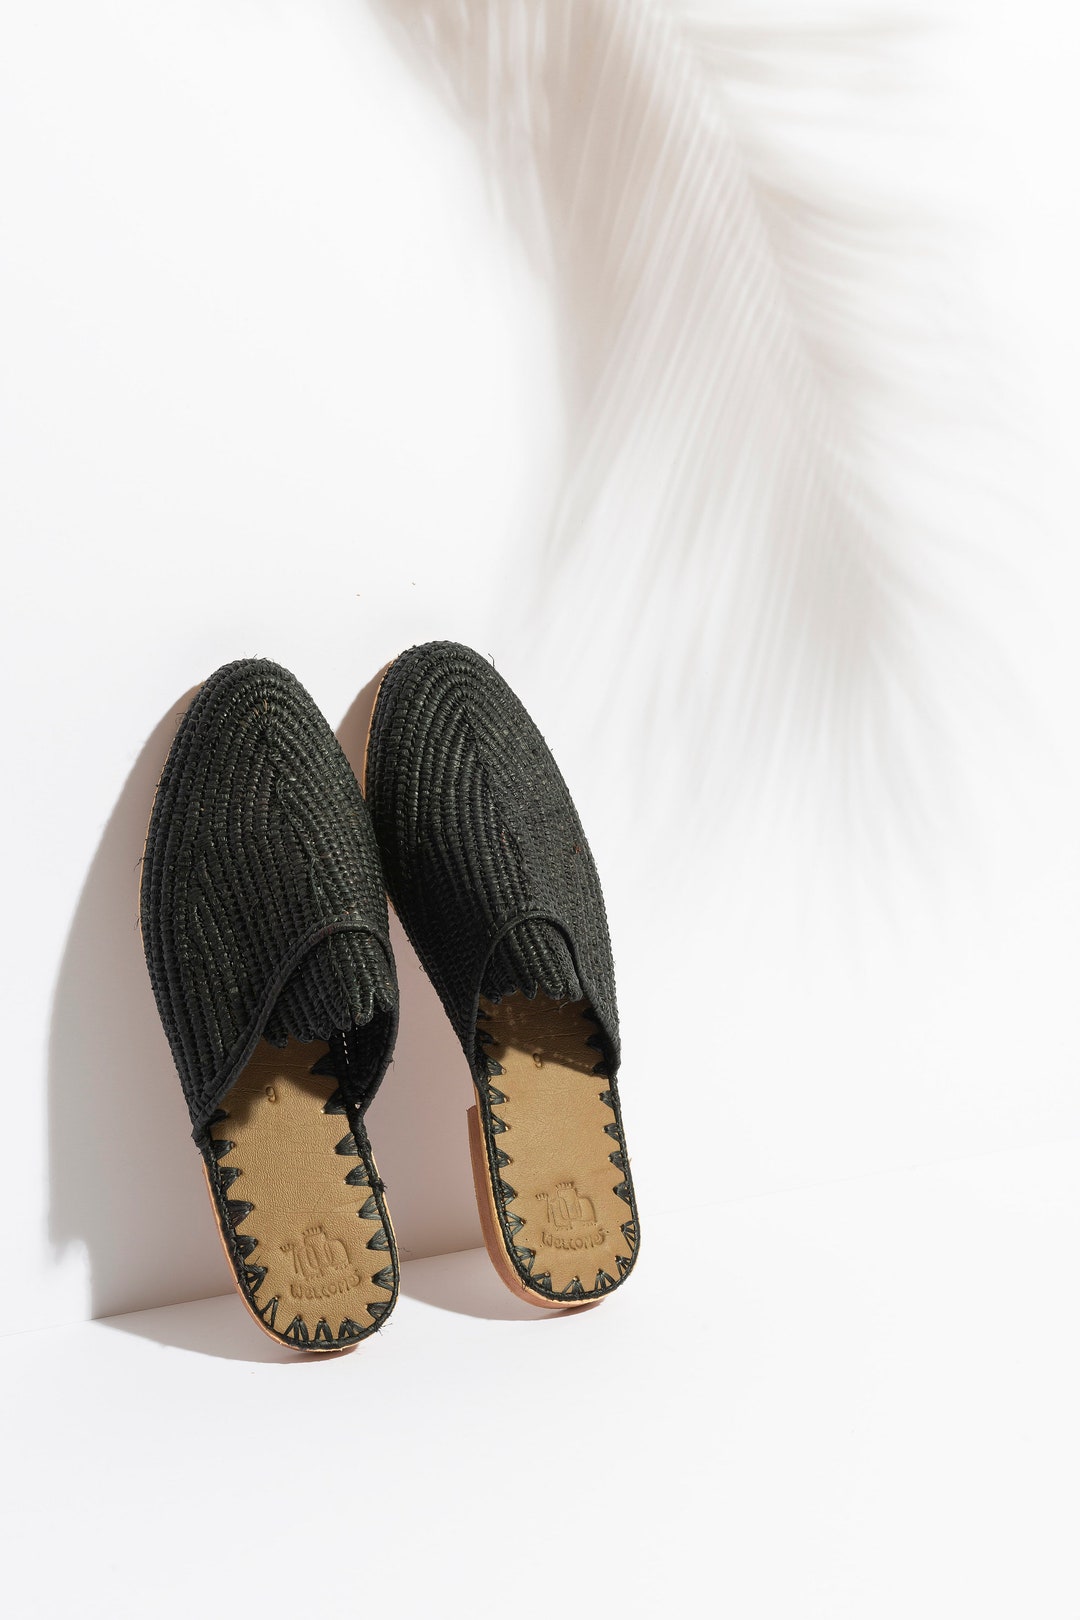 Black Raffia Sandals / Raffia Shoes / Raffia Slides / Moroccan - Etsy